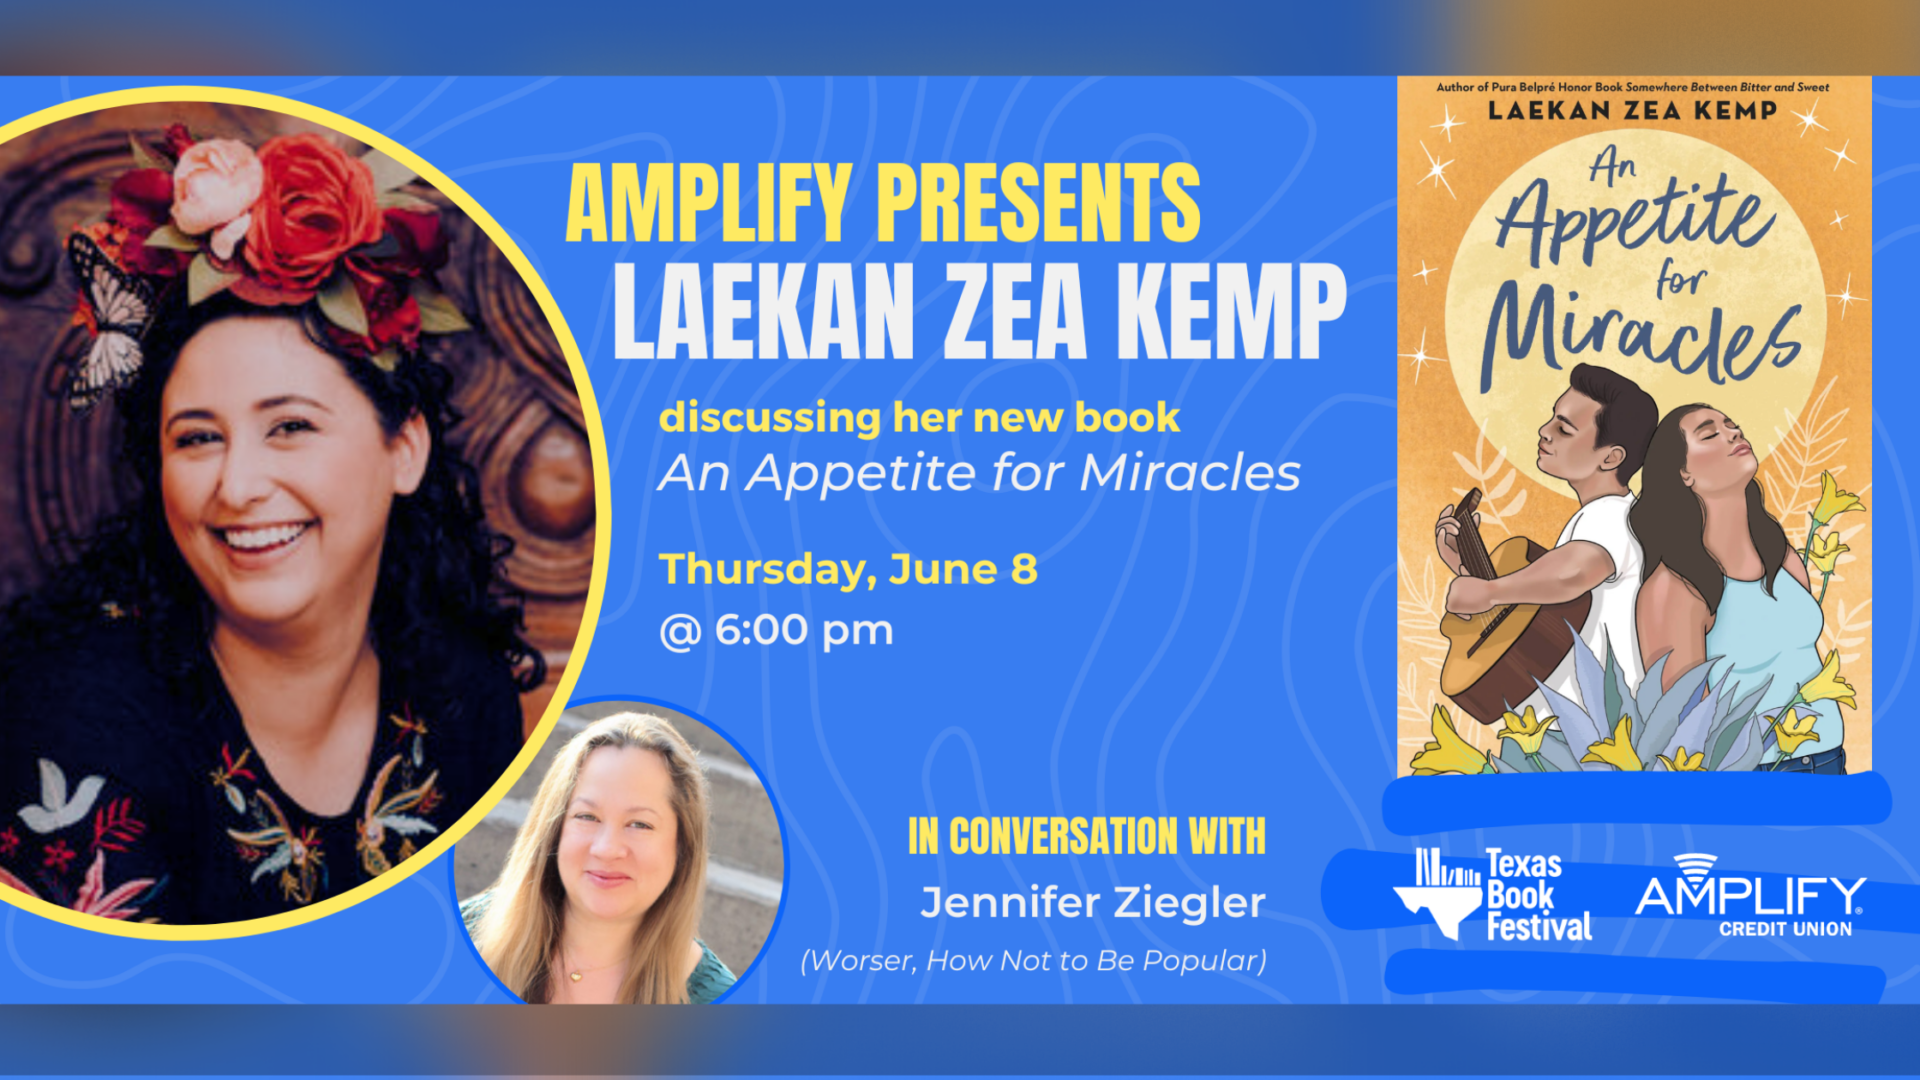 Amplify Credit Union and Texas Book Festival Presents: Laekan Zea Kemp